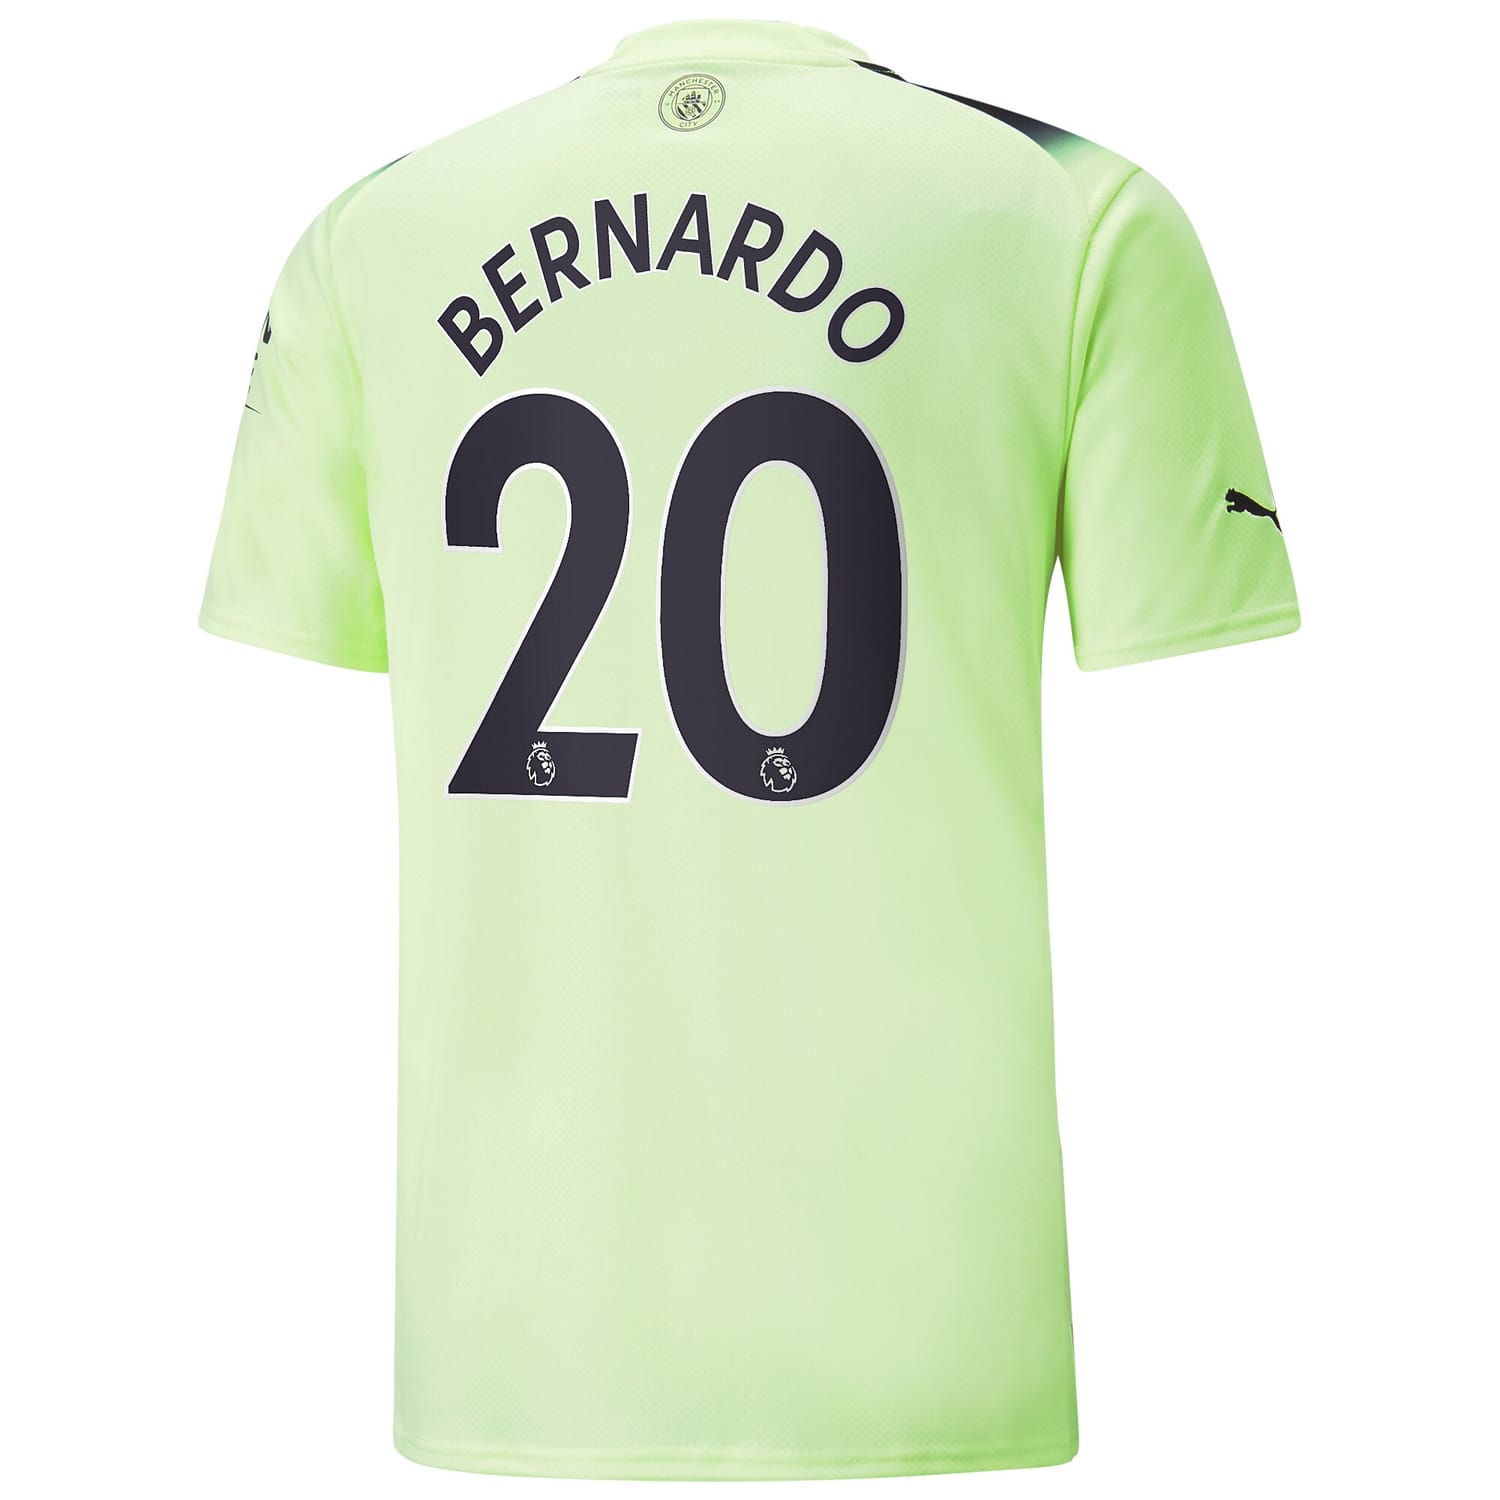 Premier League Manchester City Third Jersey Shirt 2022-23 player Bernardo Silva 20 printing for Men